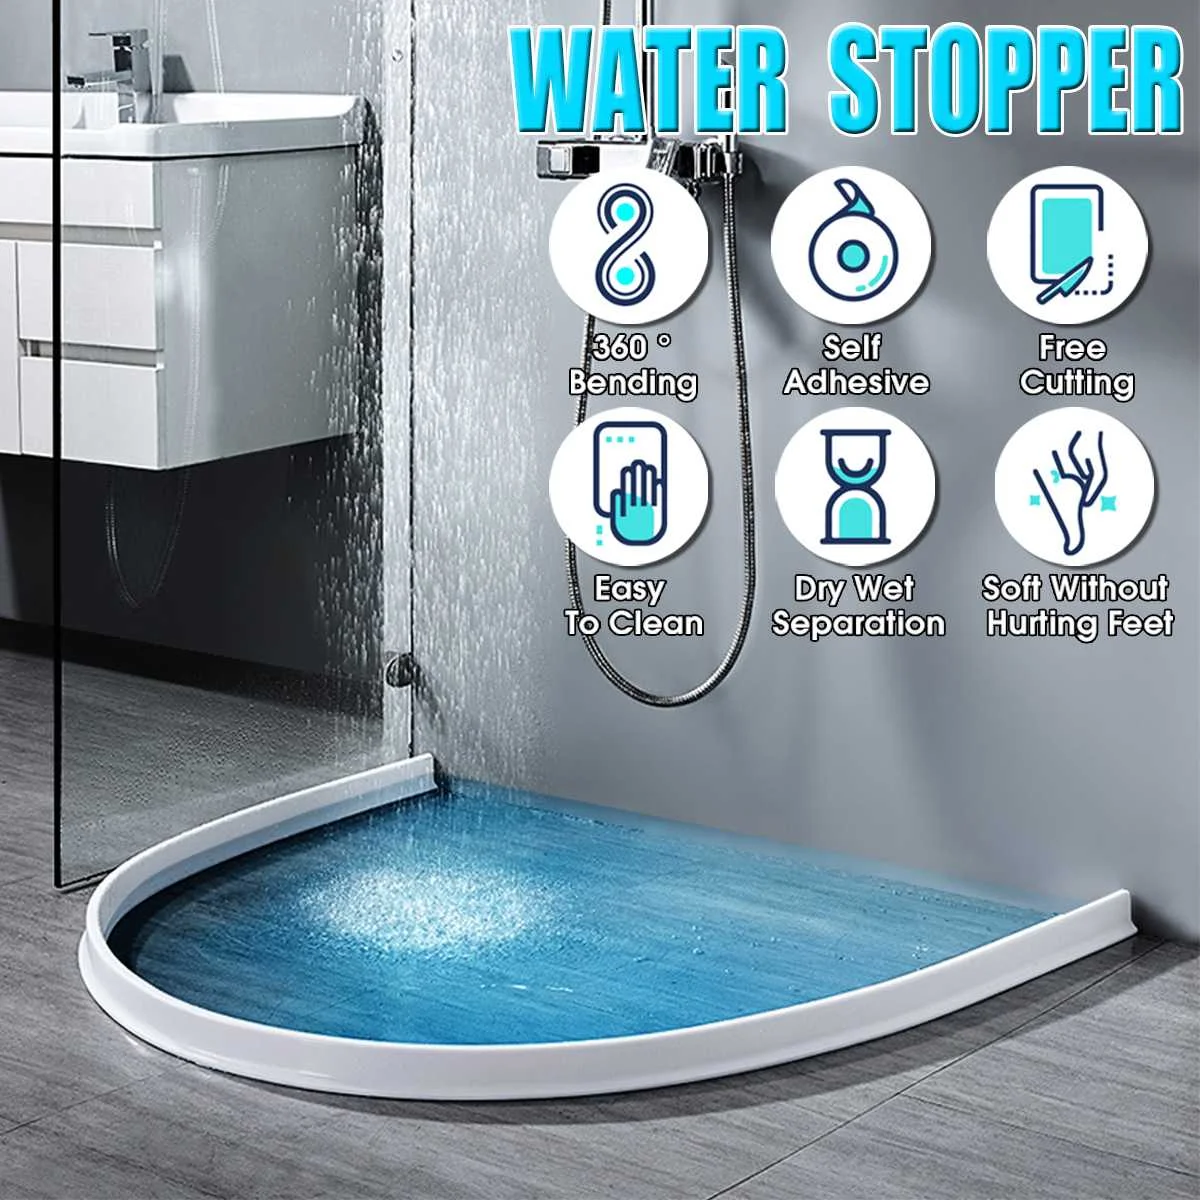 

Silicone Bathroom Water Stopper Retention Blocker Shower Dam Dry Wet Separation Flood Barrier Door Bottom Sealing Strip Bathroom